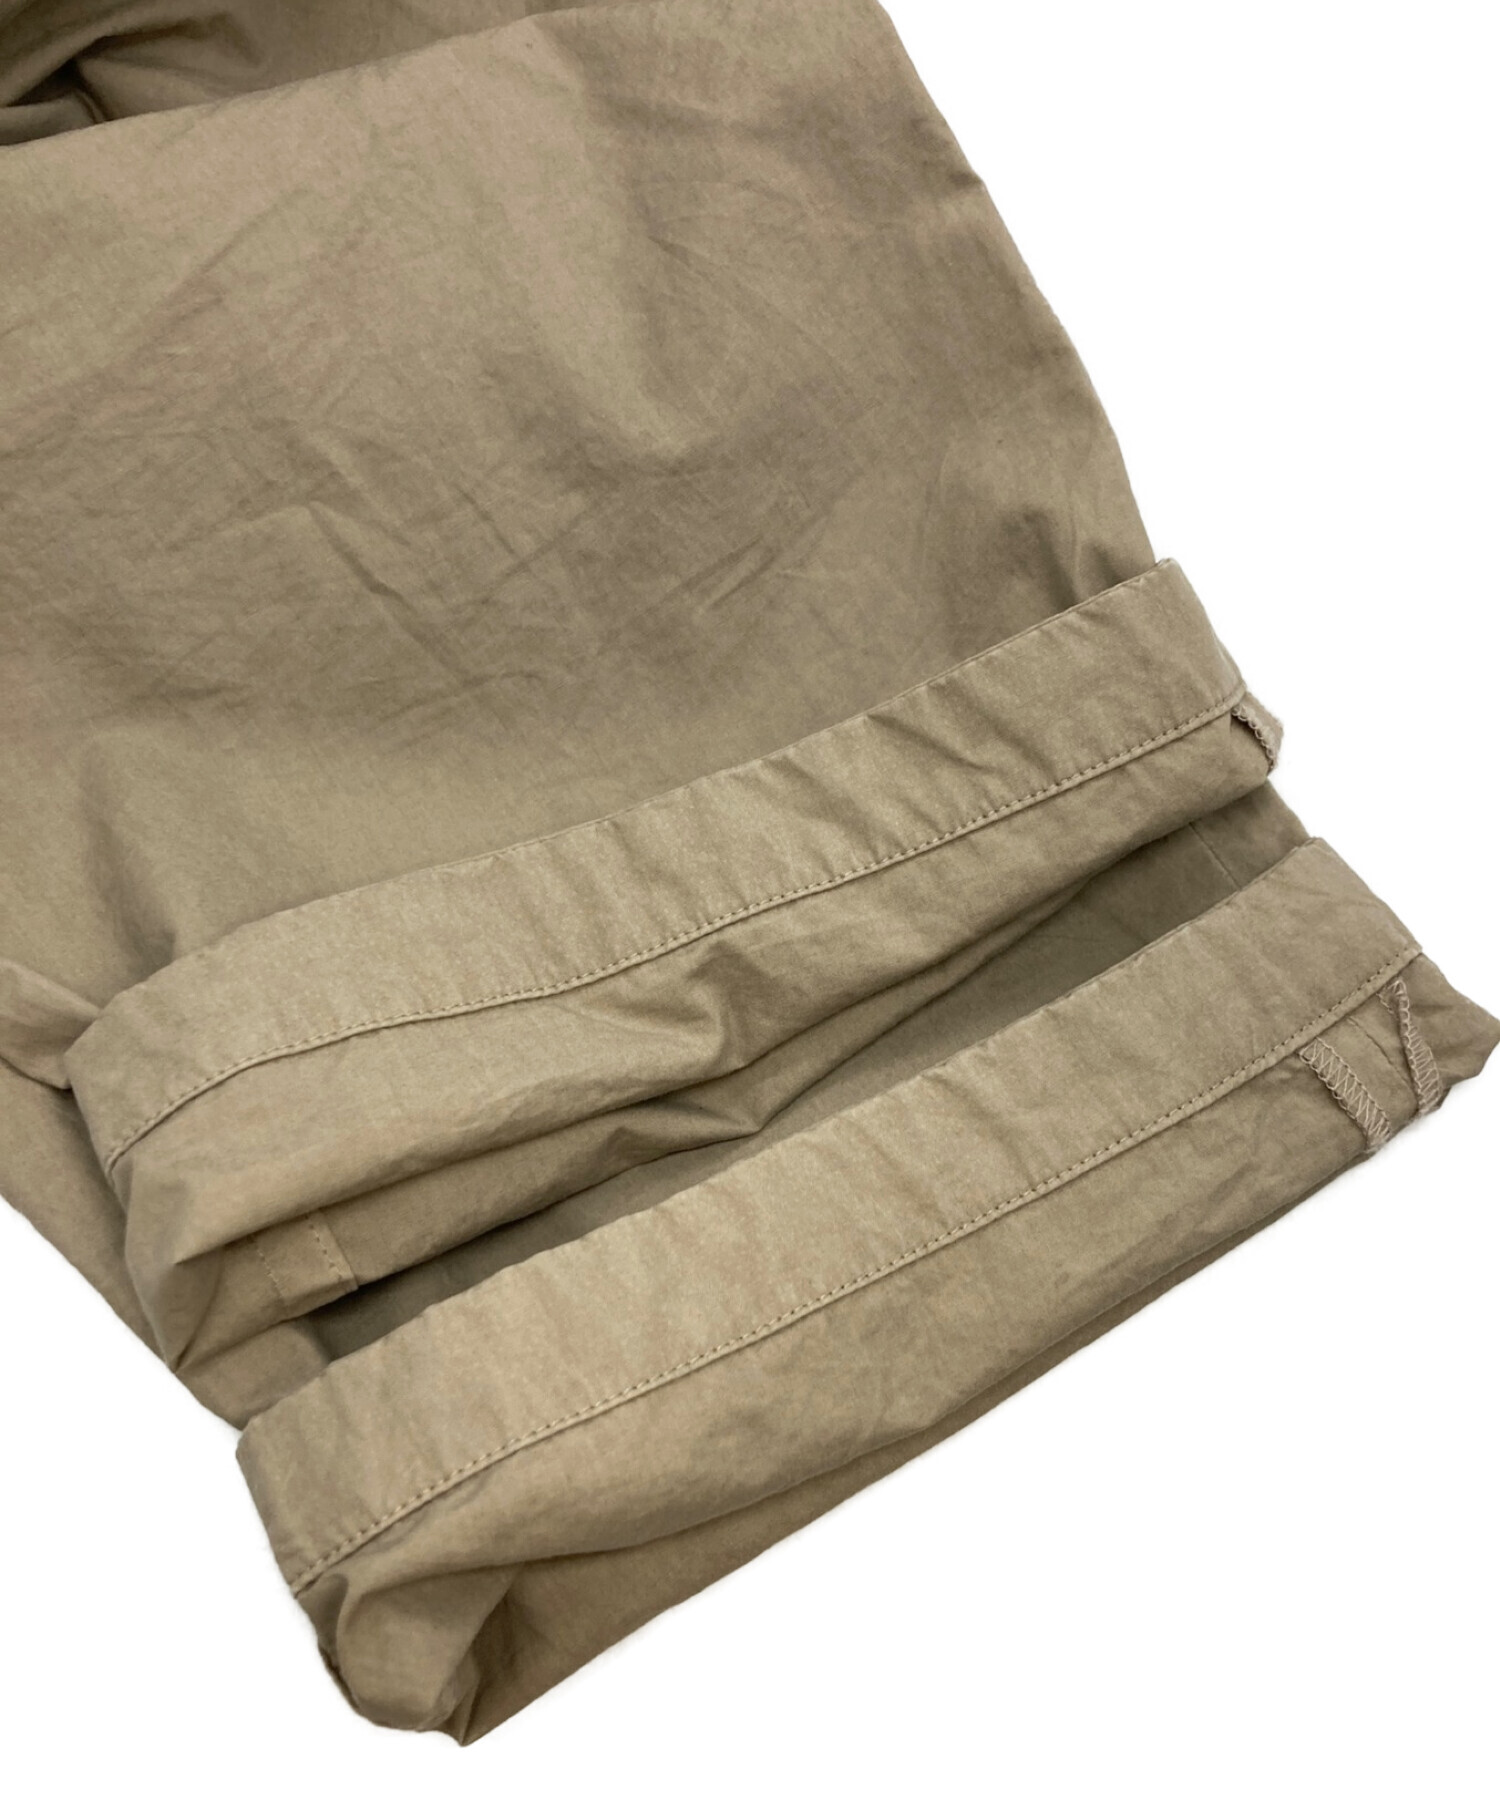 kontor (コントール) Back Seam Garment Dyed Pants ブラウン サイズ:1